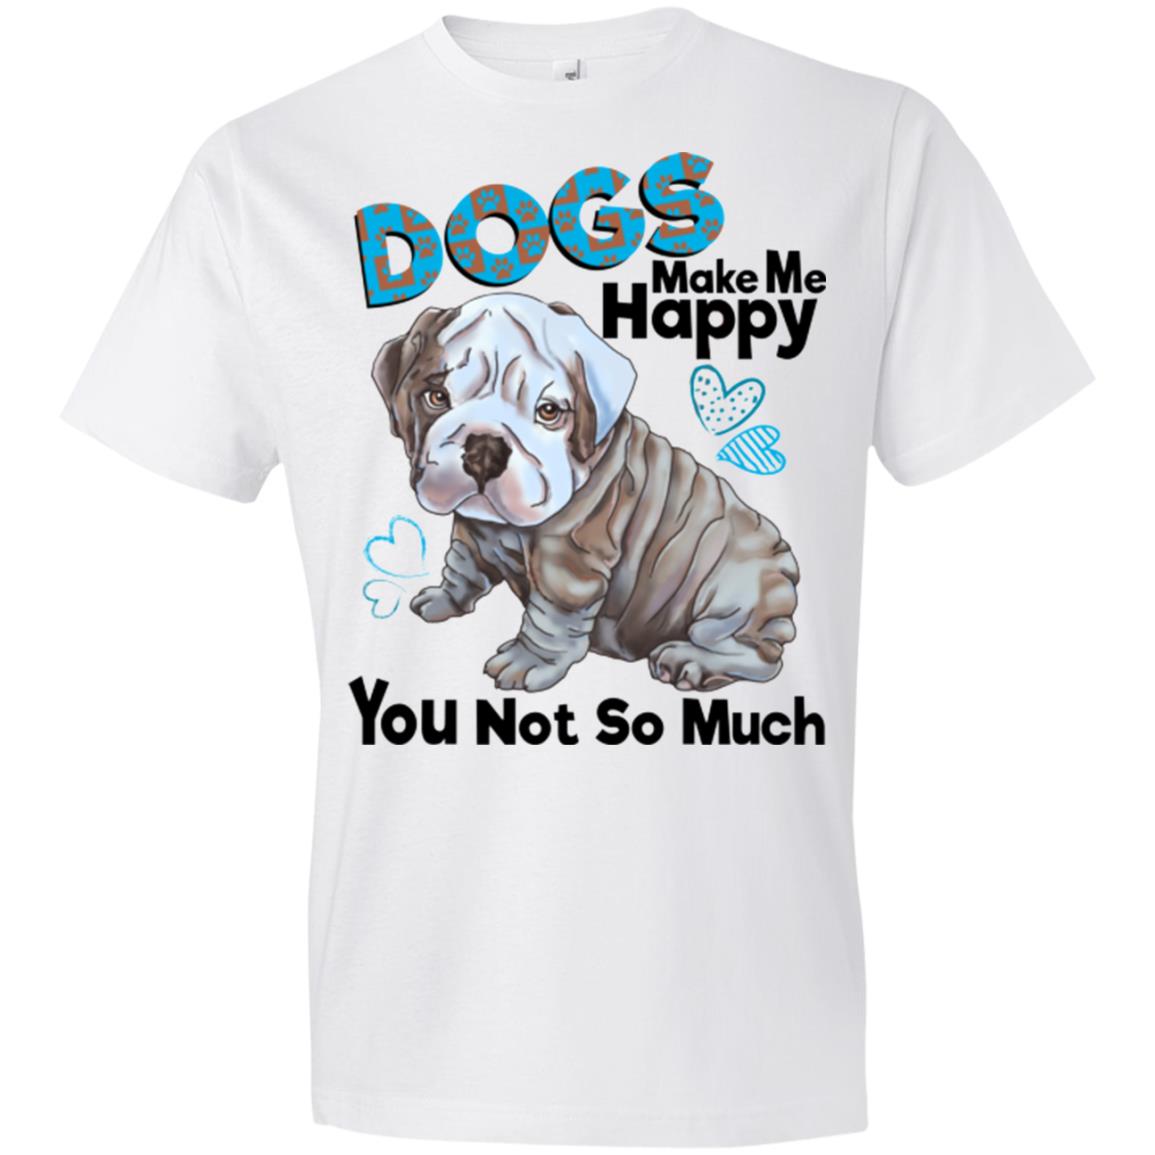 English bulldog premium T-shirt for Men, Women, Dogs Make Me Happy - GoneBold.gift